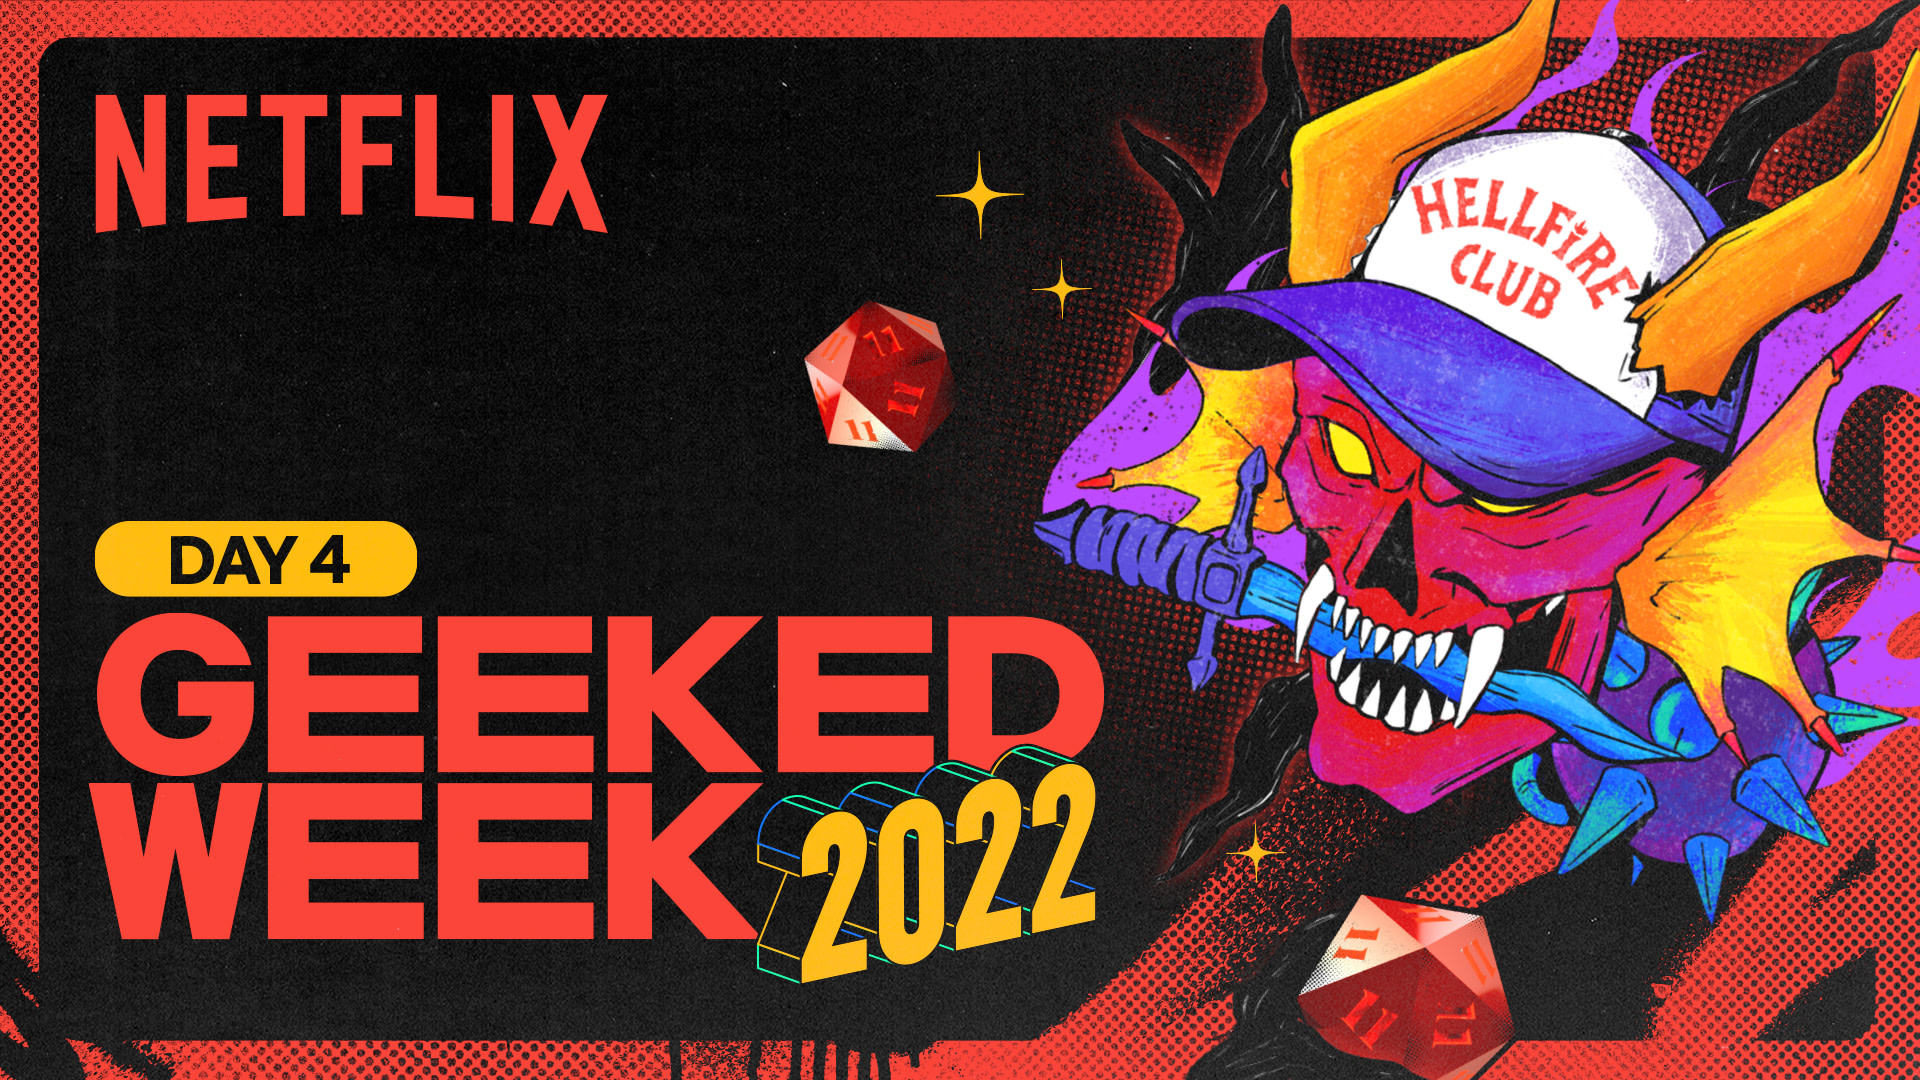 Resumo da Semana Geeked 2022: bastidores do Dia de Stranger Things